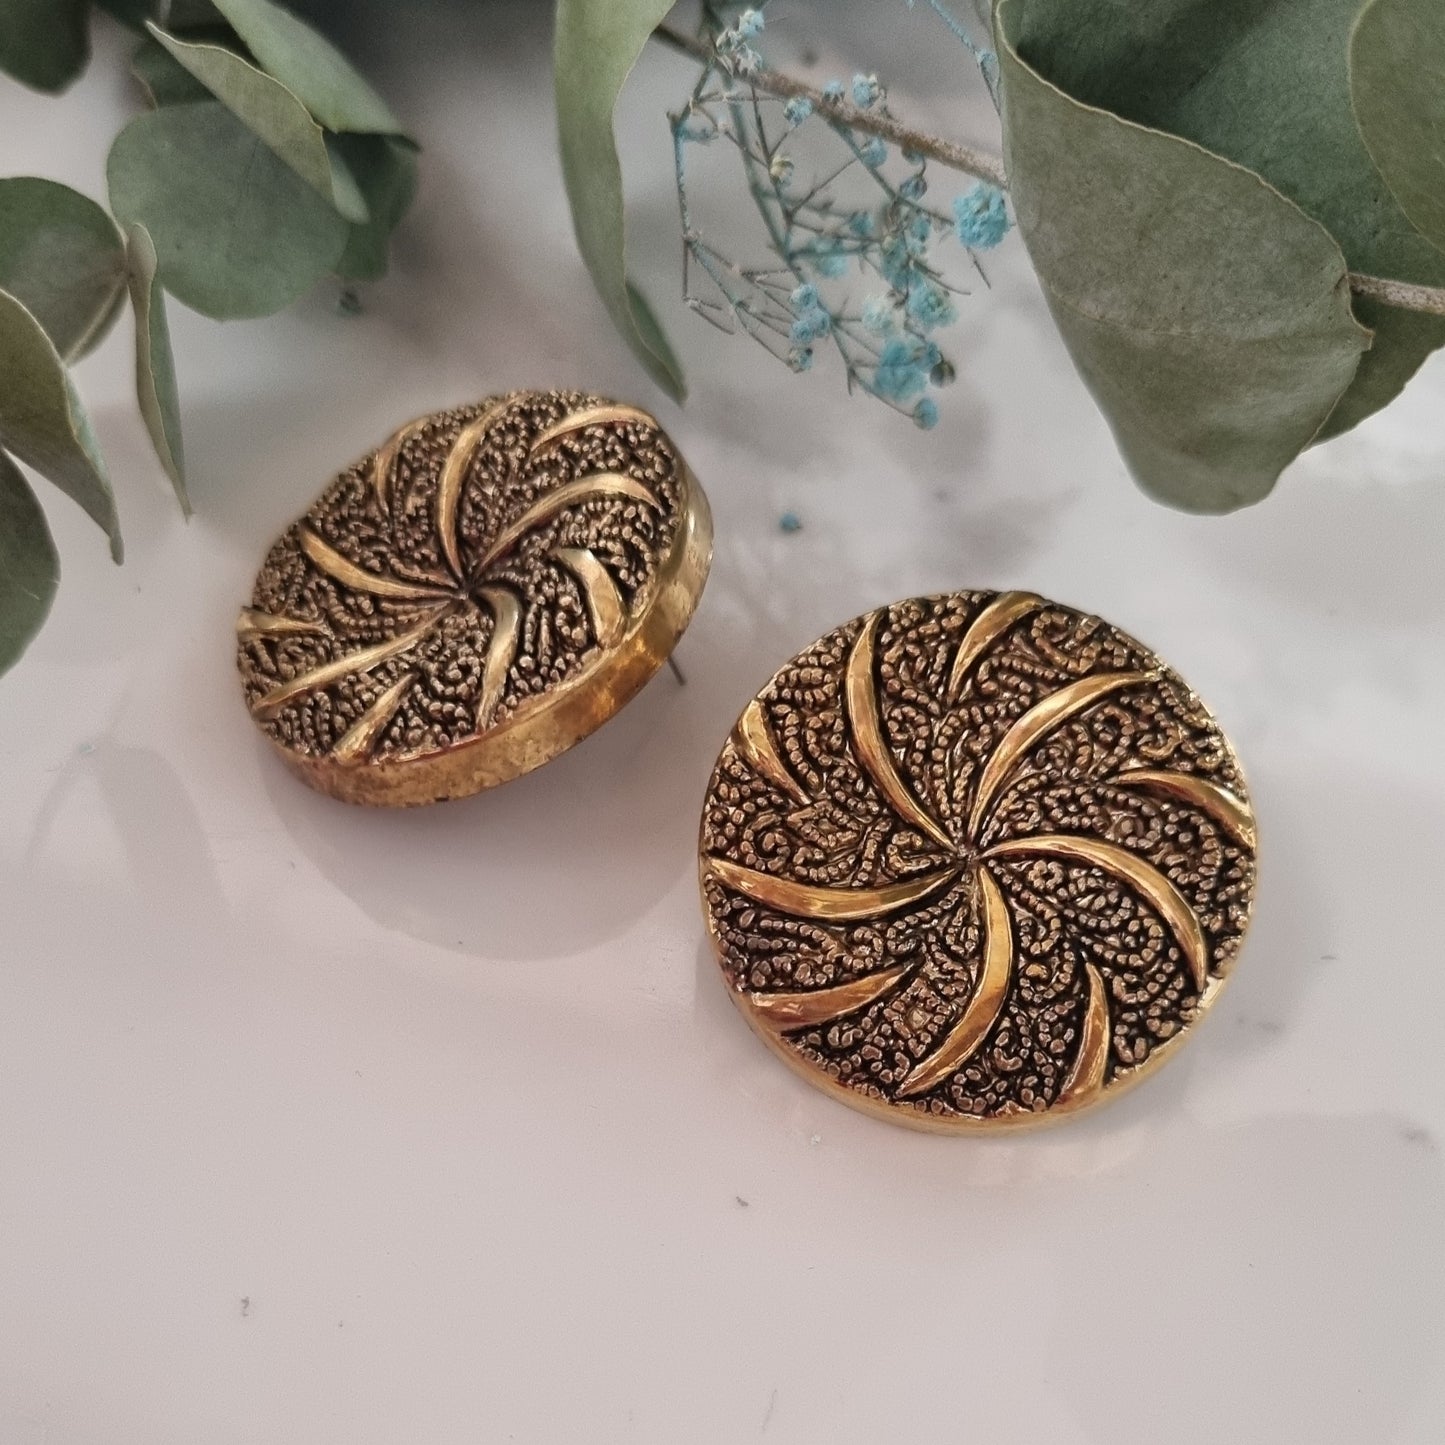 Vintage earrings - Antique gold